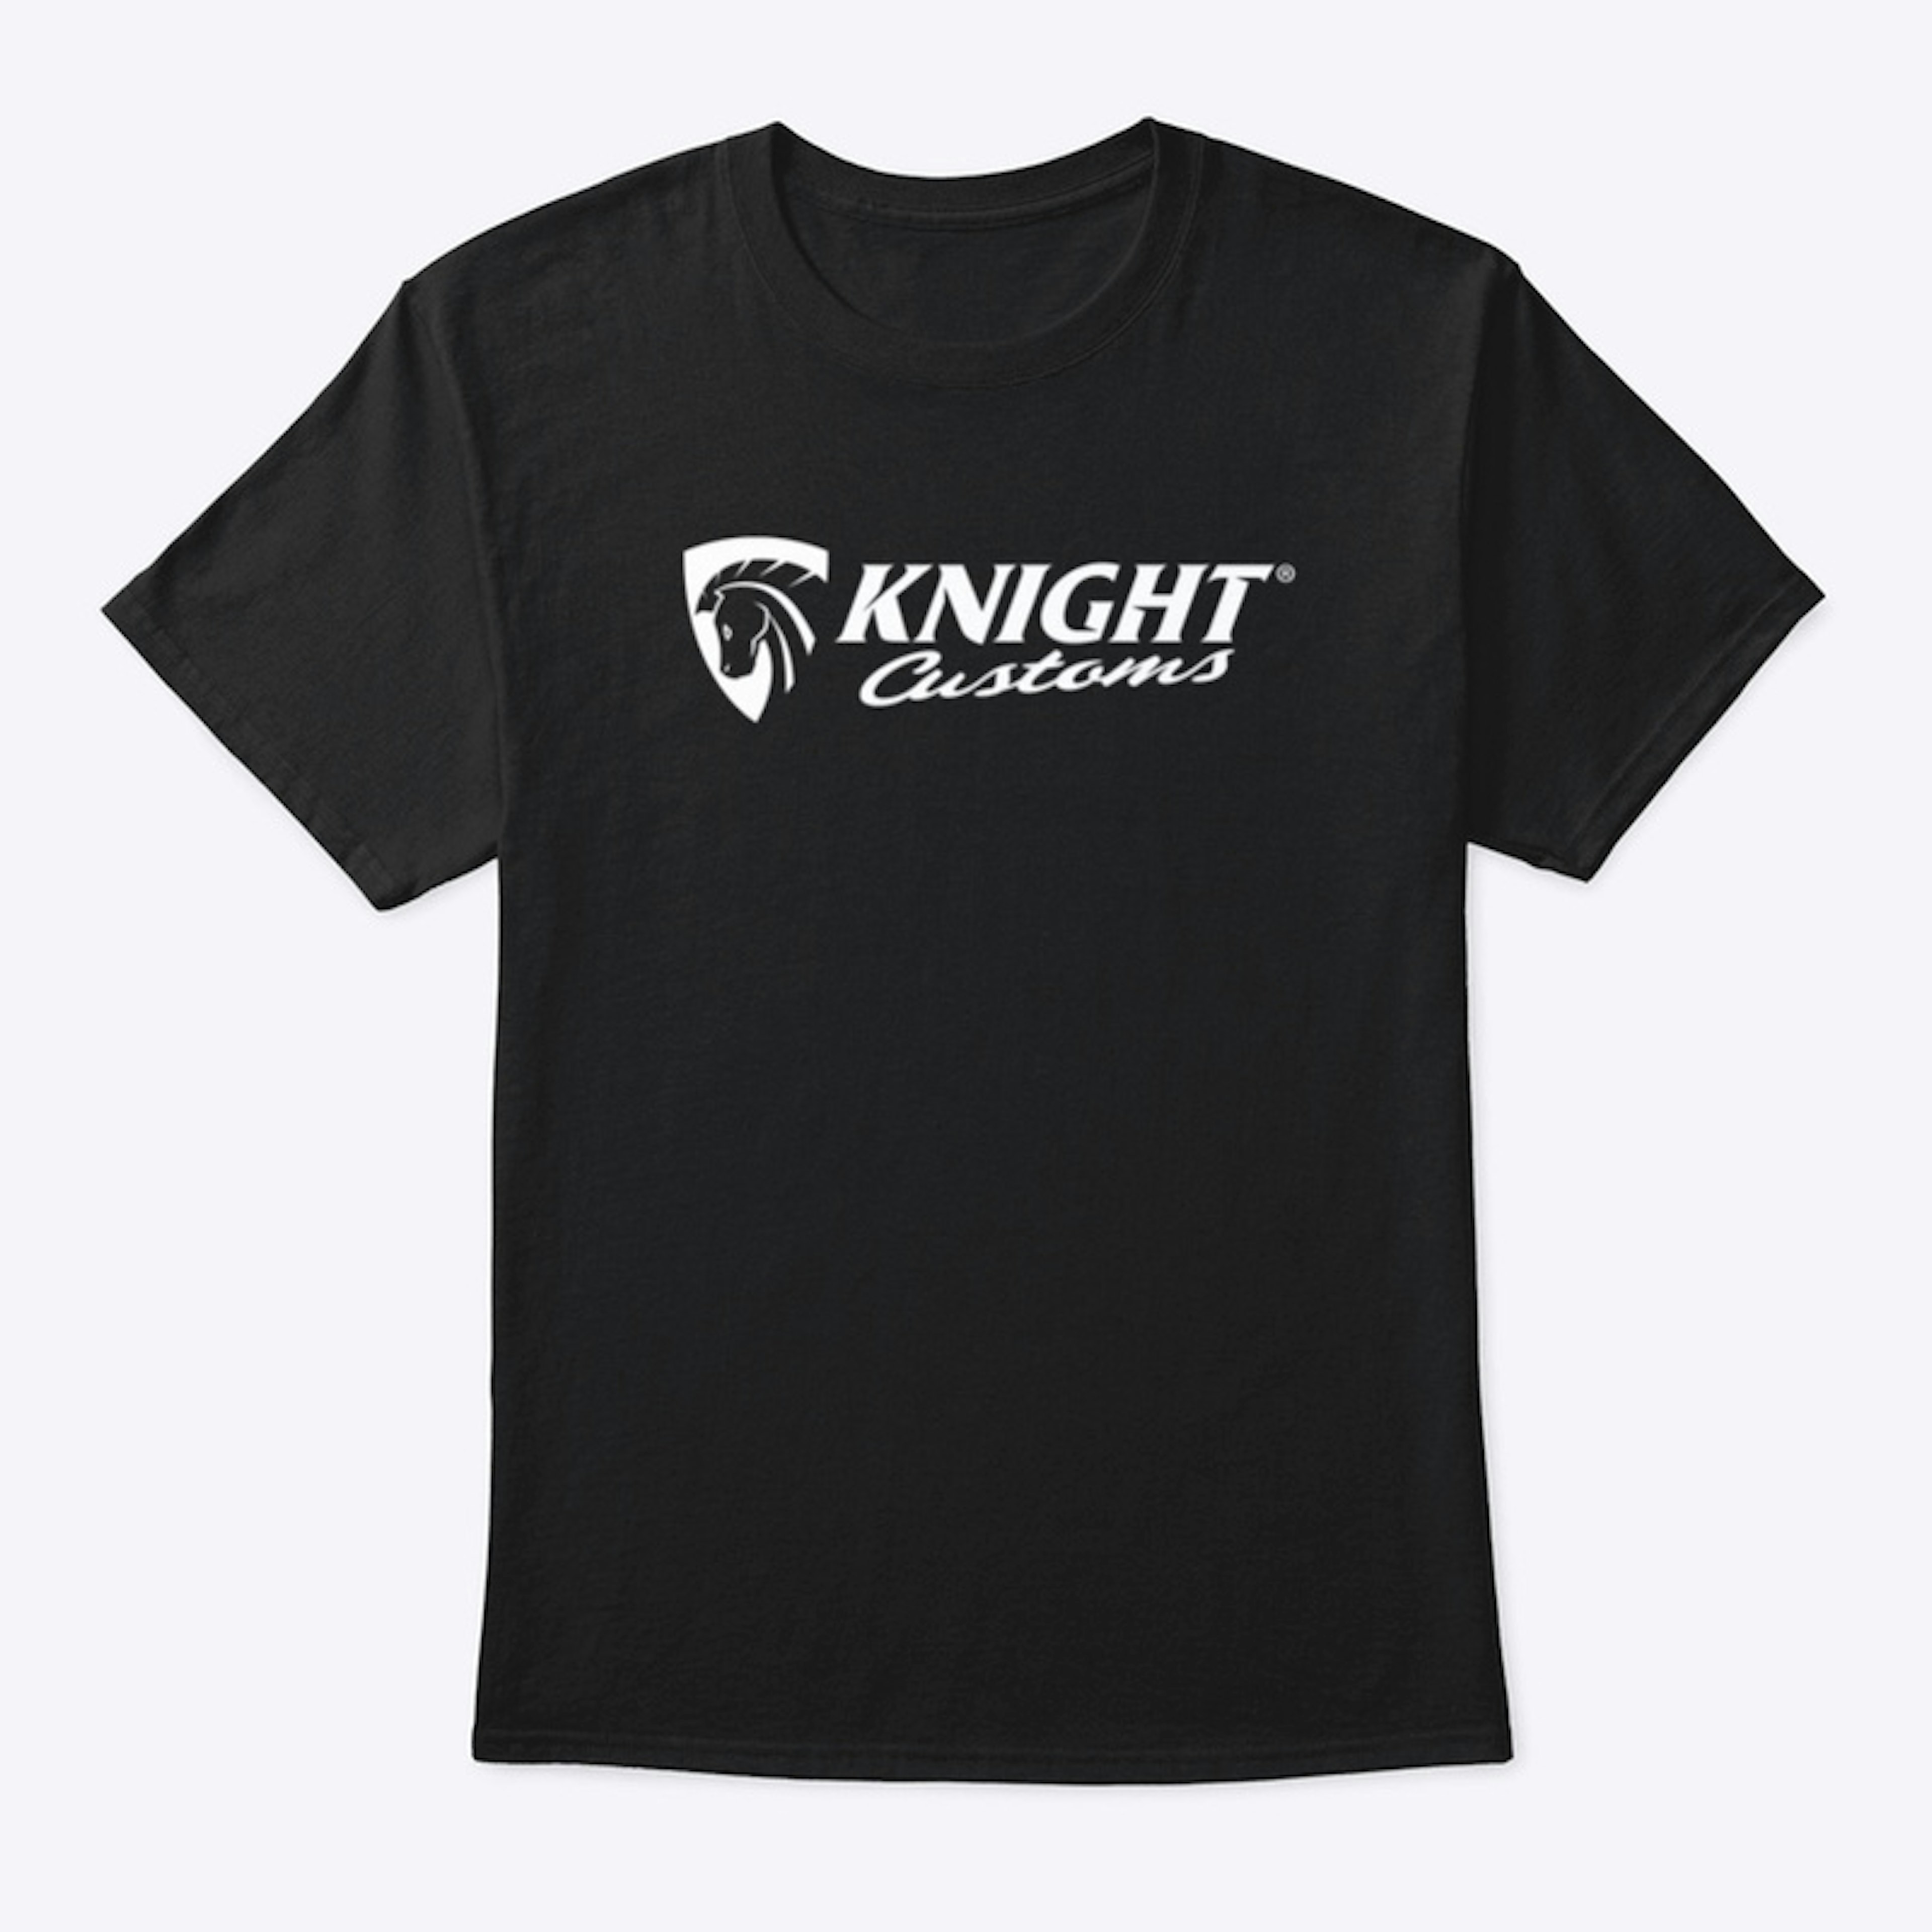 Knight Customs Classic White